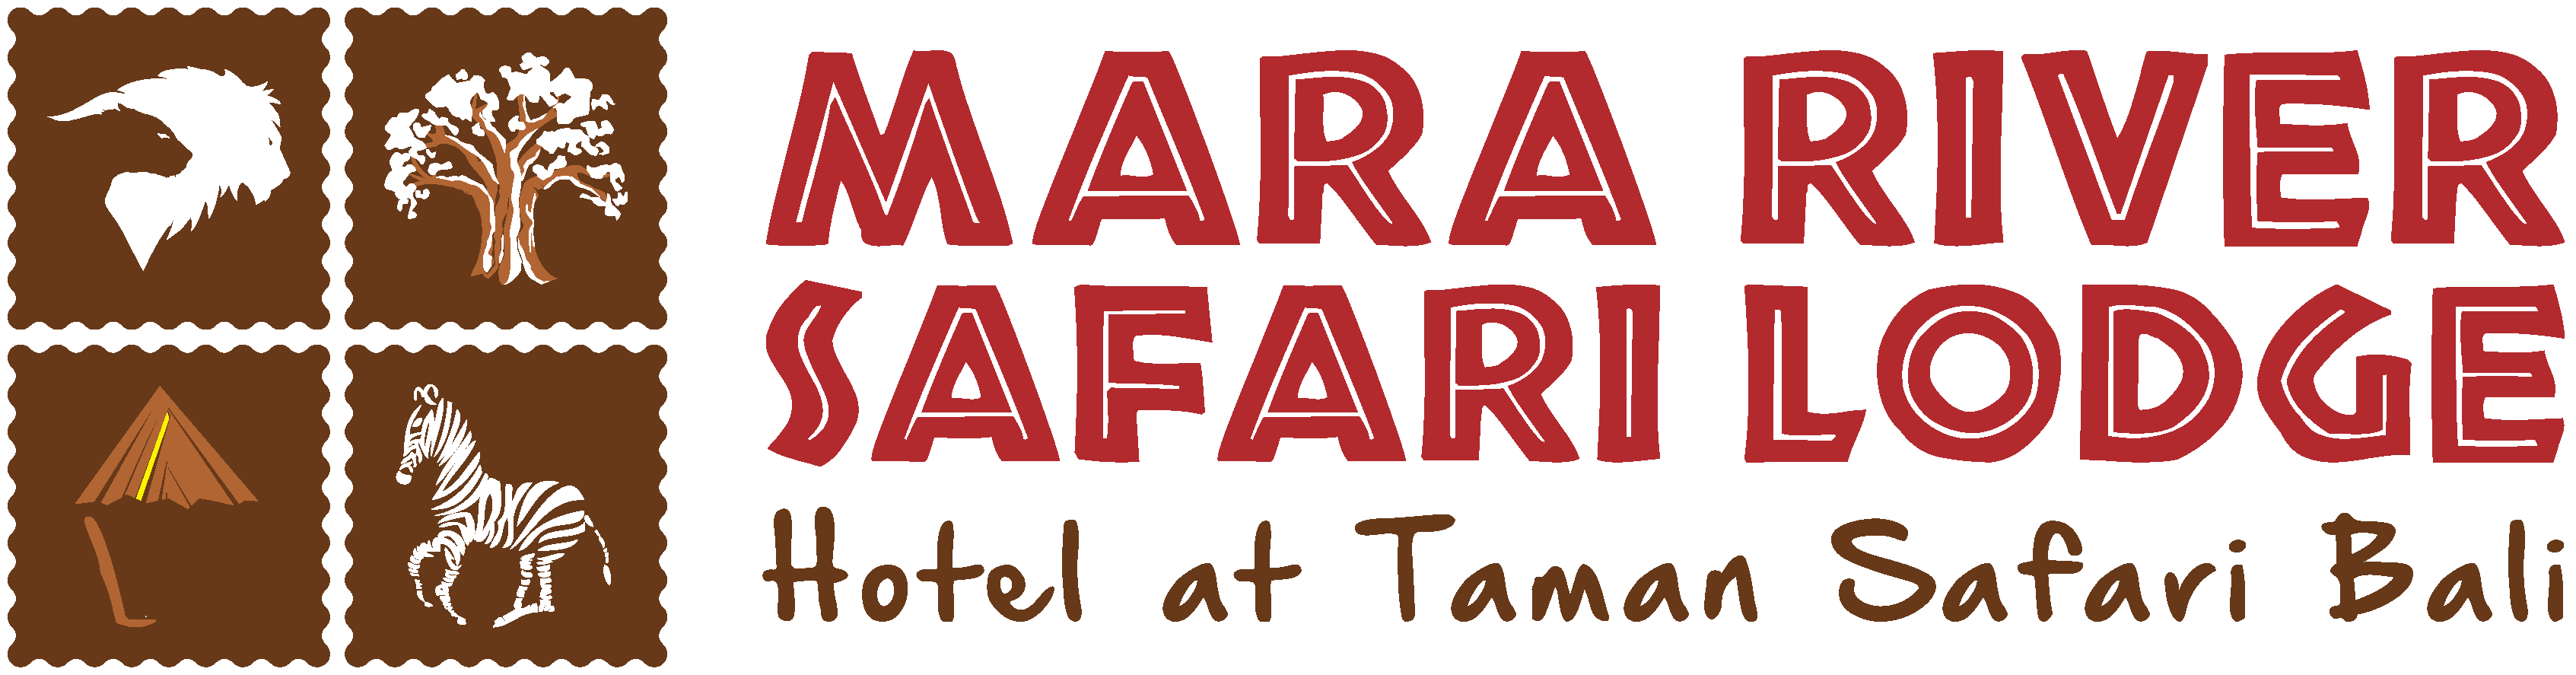 Mara River Safari Lodge - Logo Full